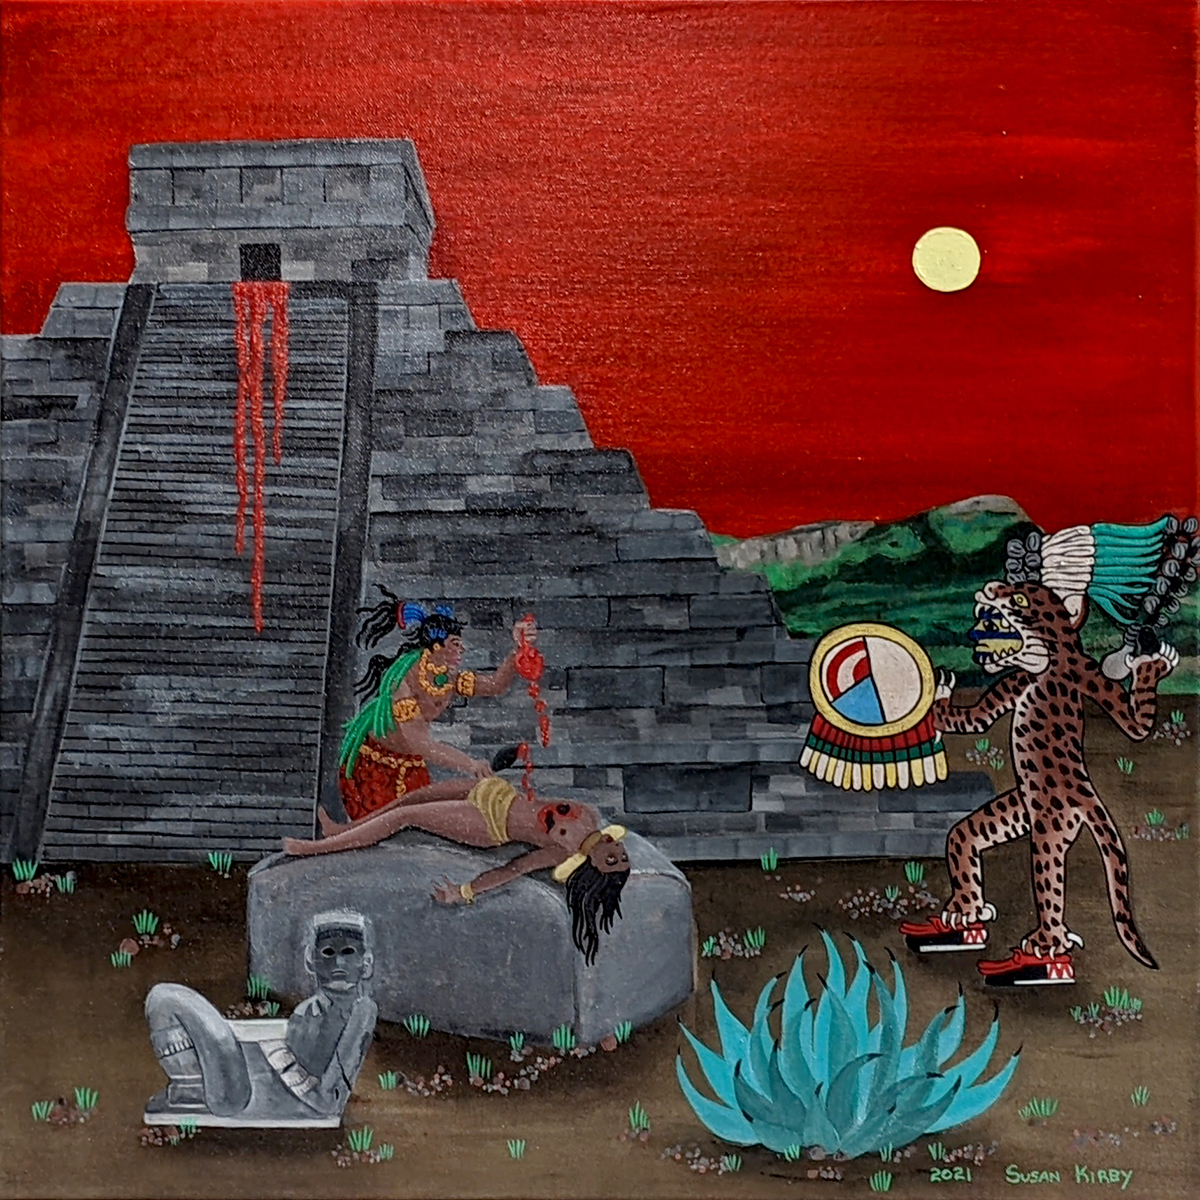 Aztec Life